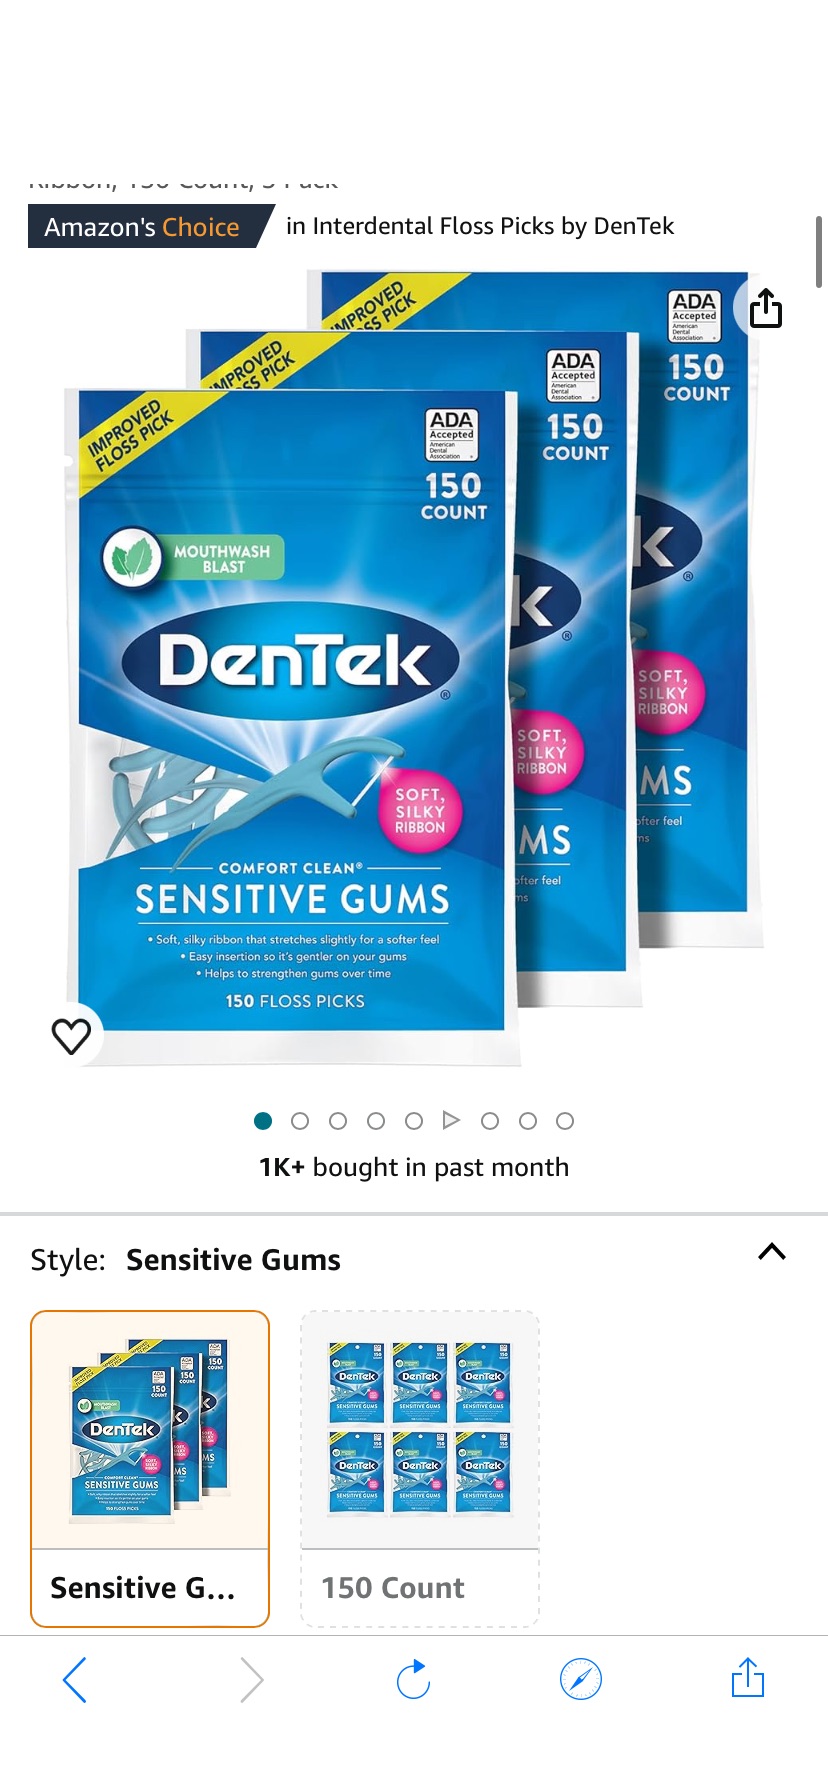 Amazon.com : DenTek Comfort Clean Sensitive Gums Floss Picks, Soft & Silky Ribbon, 150 Count, 3 Pack : Health & Household